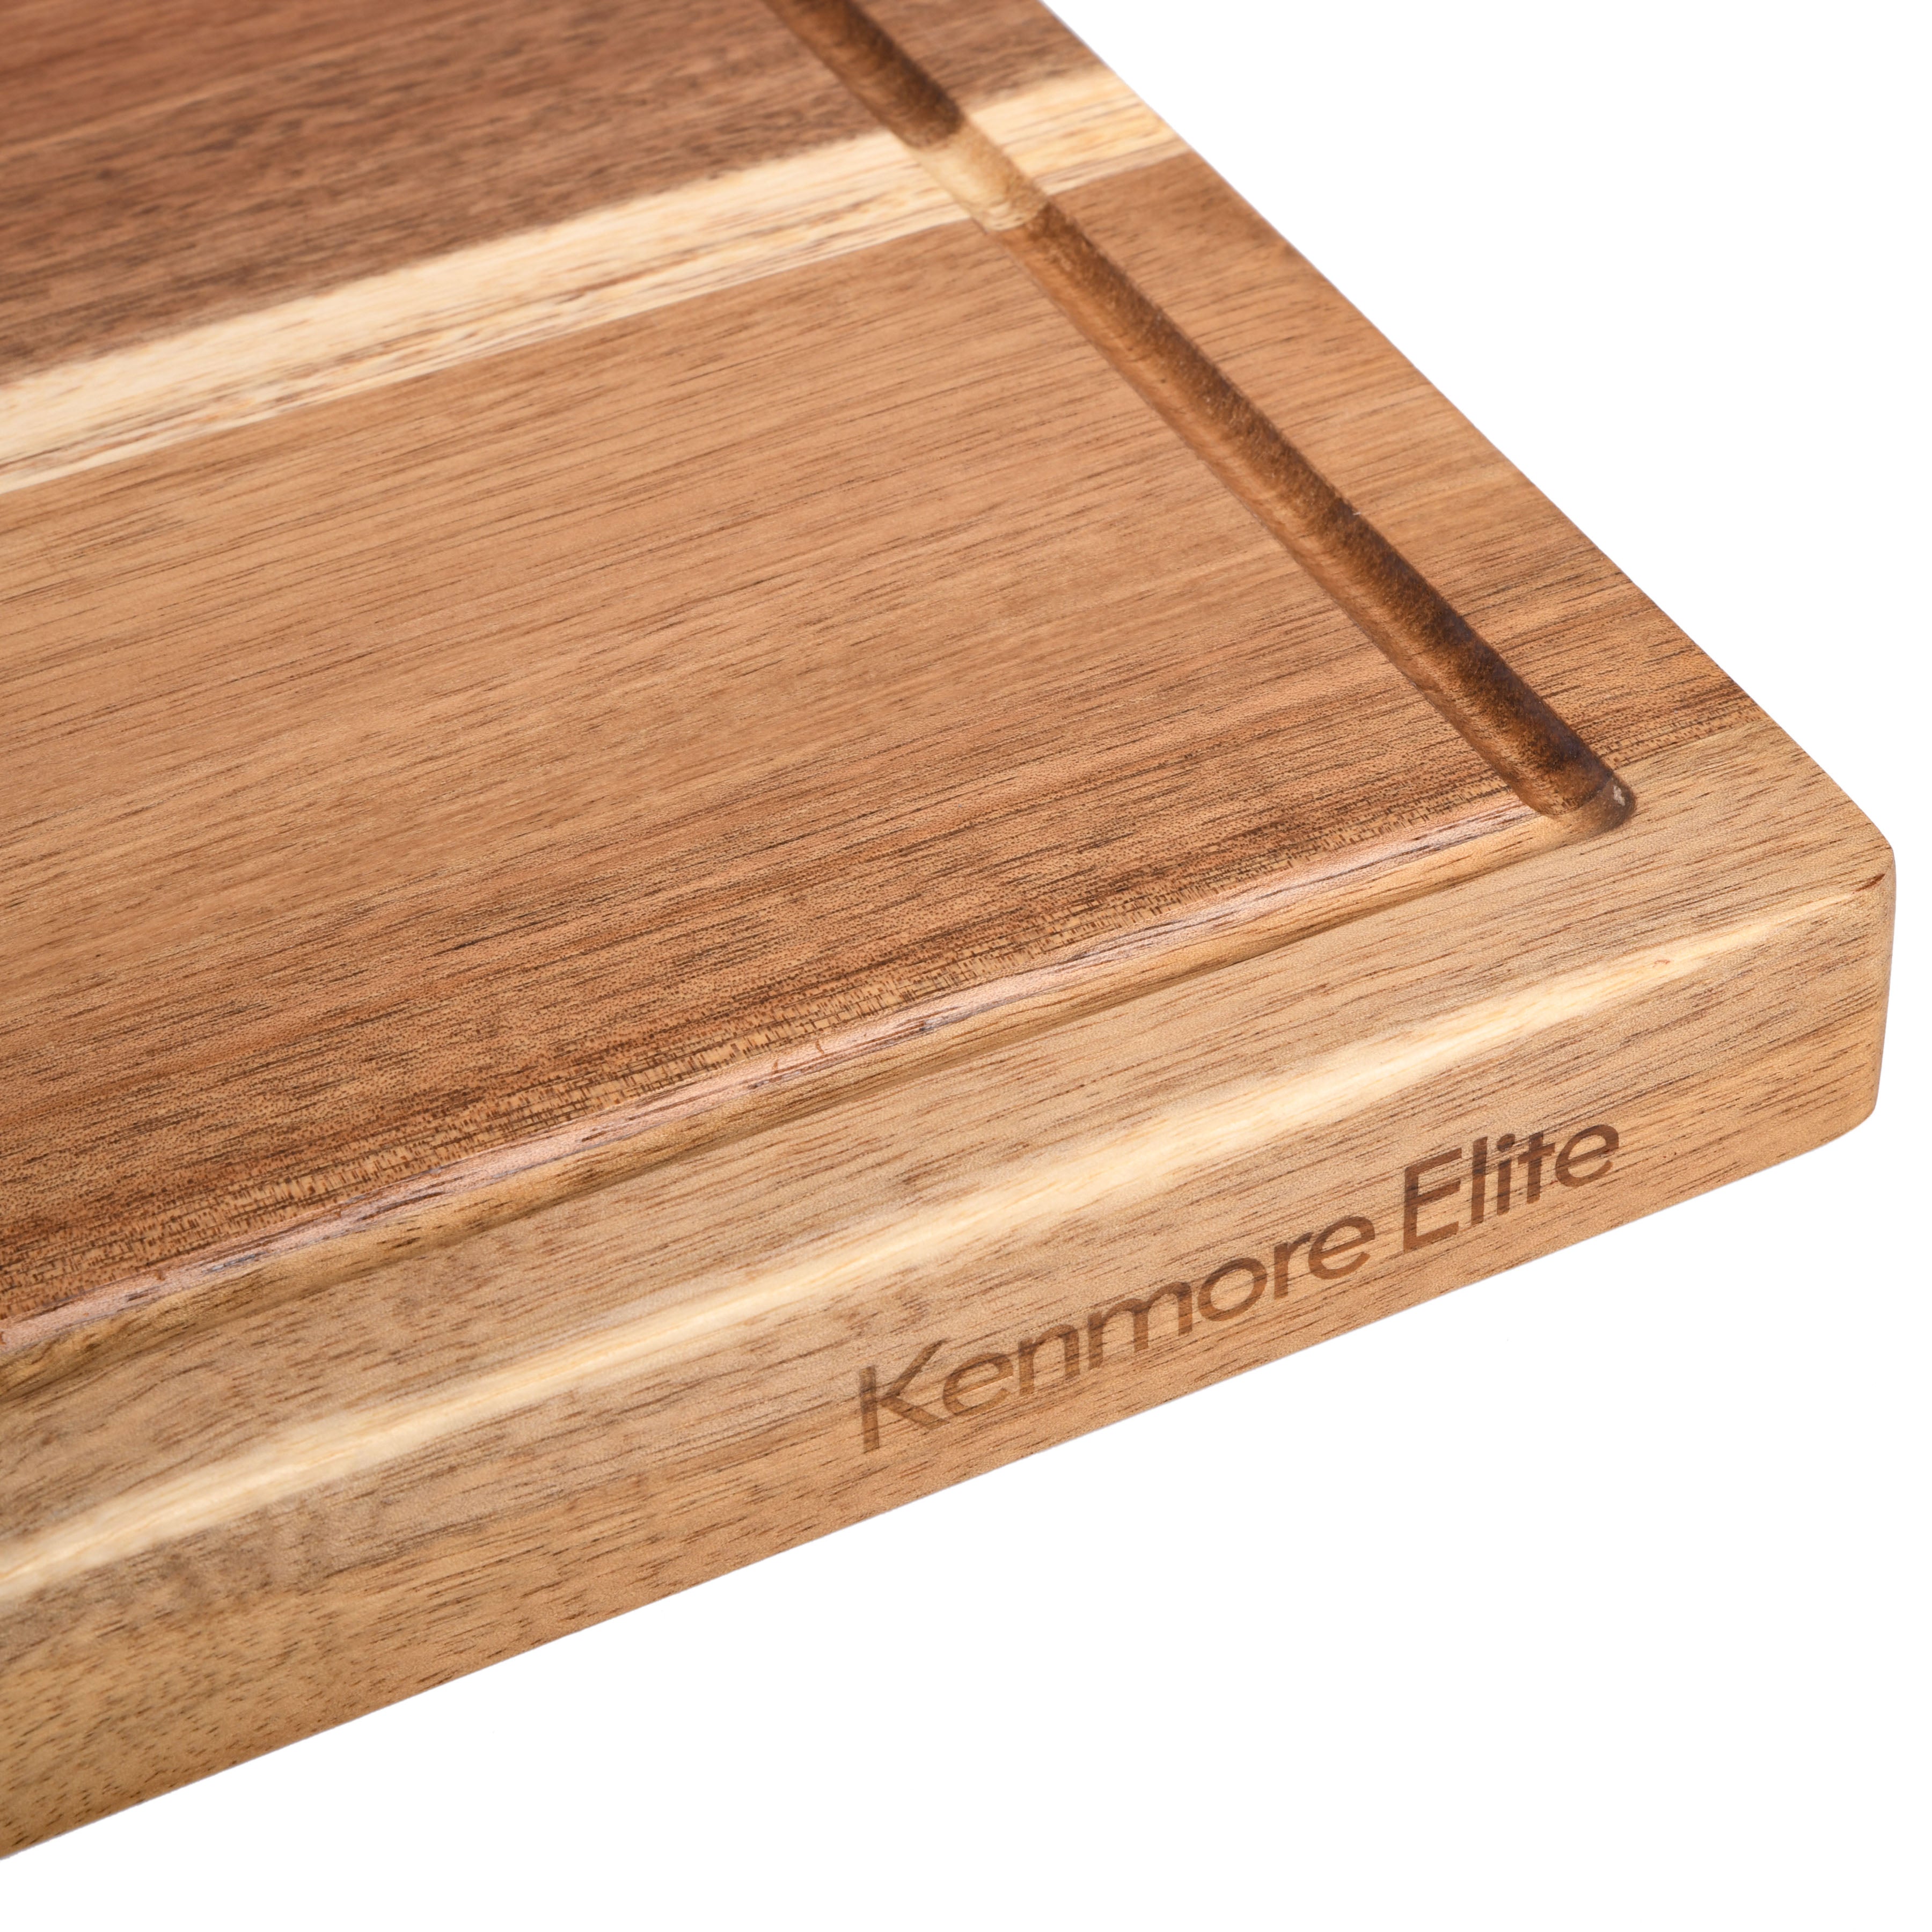 Kenmore Kenosha 24" x16" Acacia Wood Cutting Board